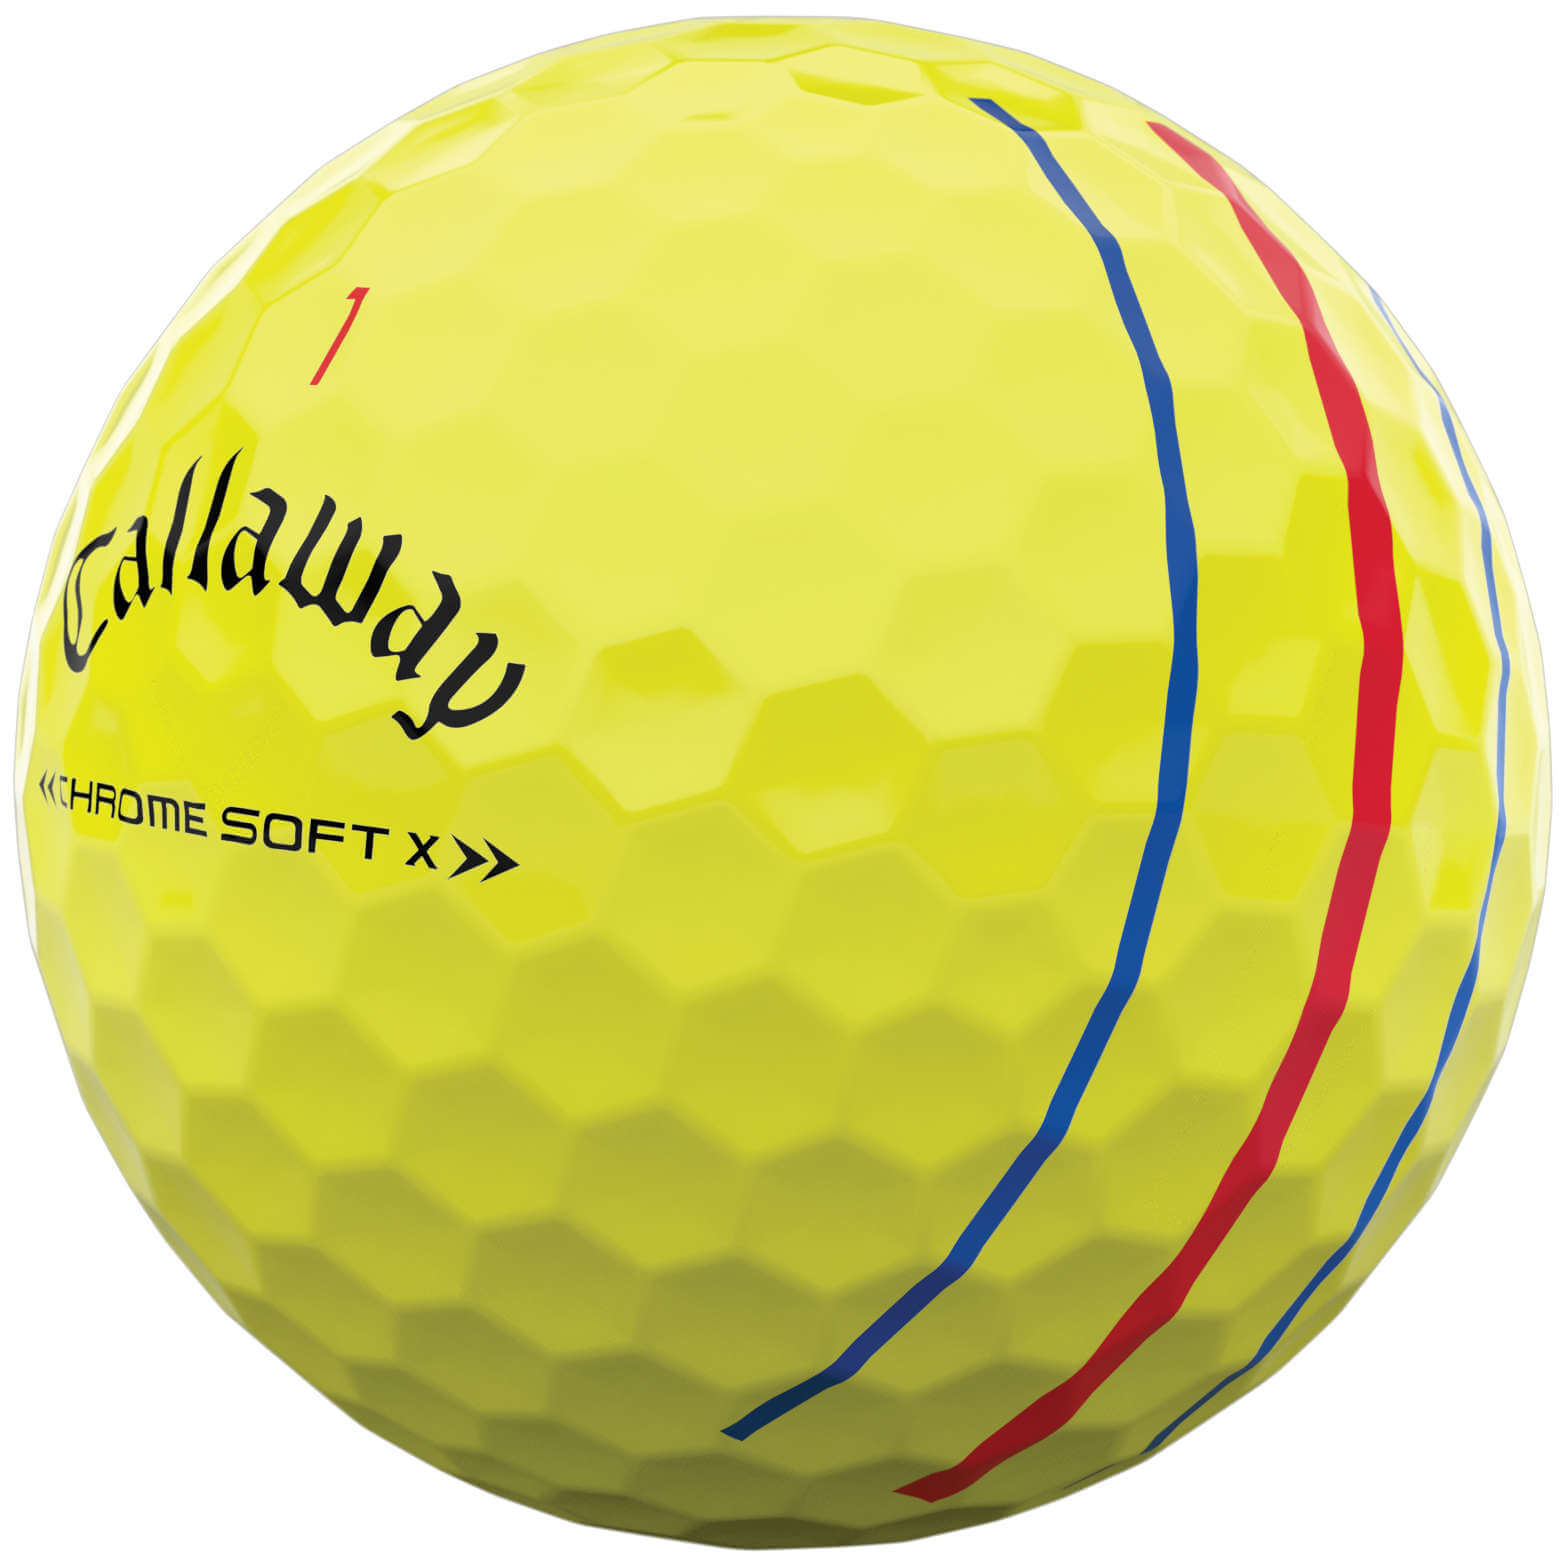 Callaway Chrome Soft X Triple Track Golfbälle, yellow